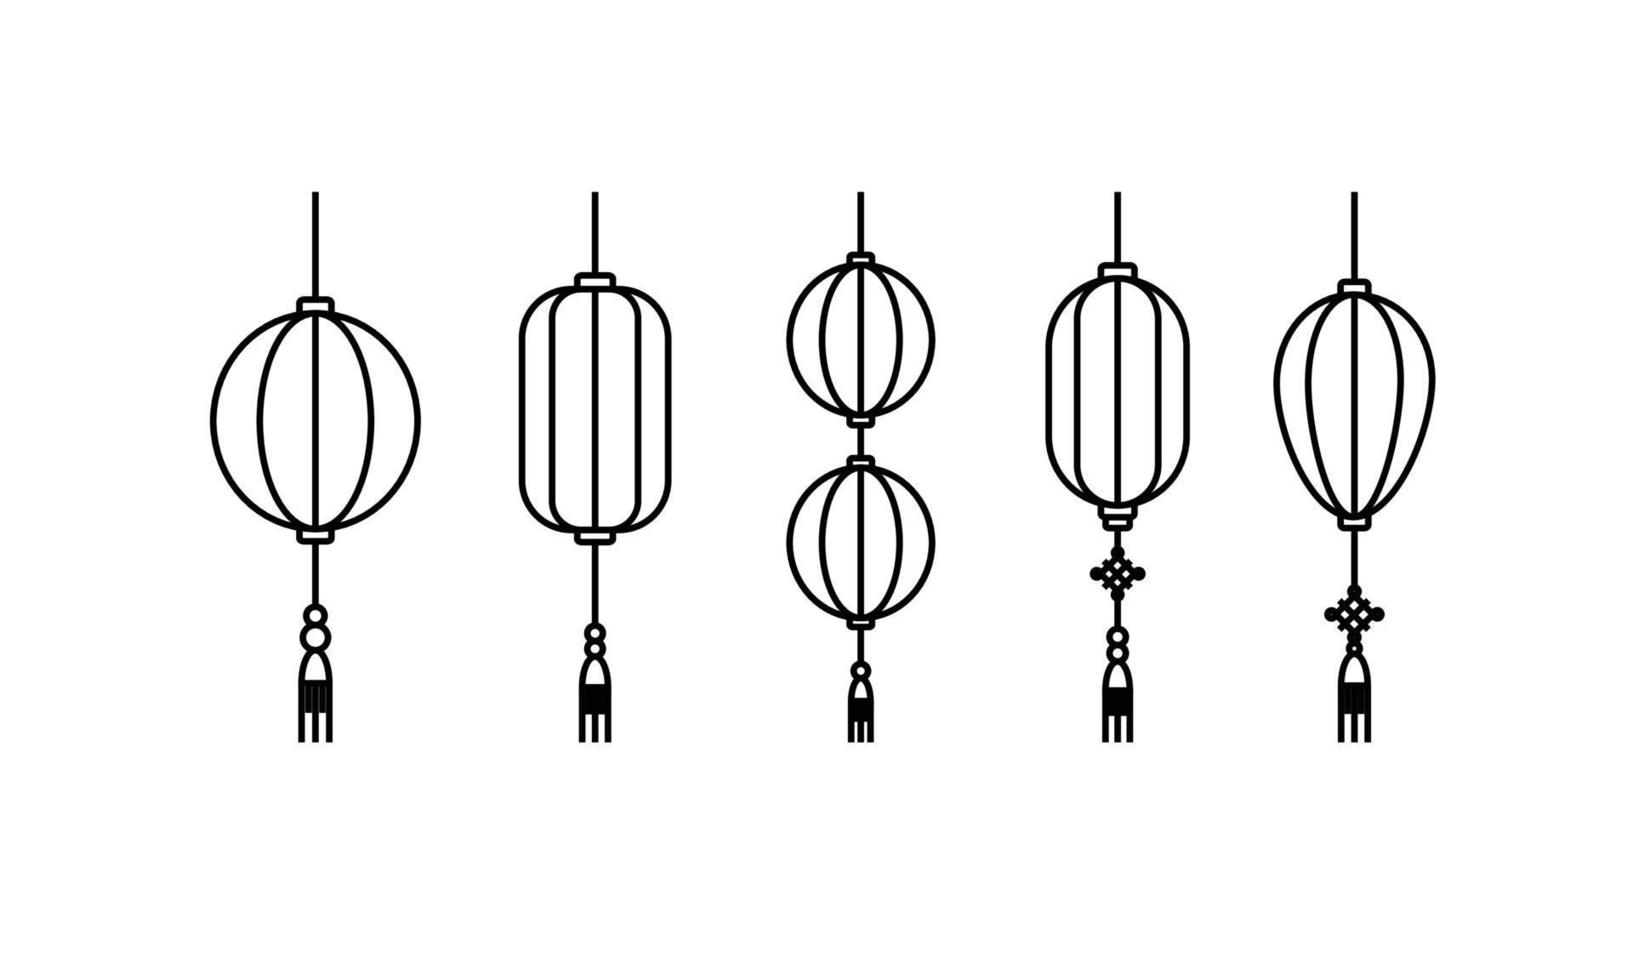 Lanterns illustrations. Set of Chinese symbols for cultural event celebrations. vector